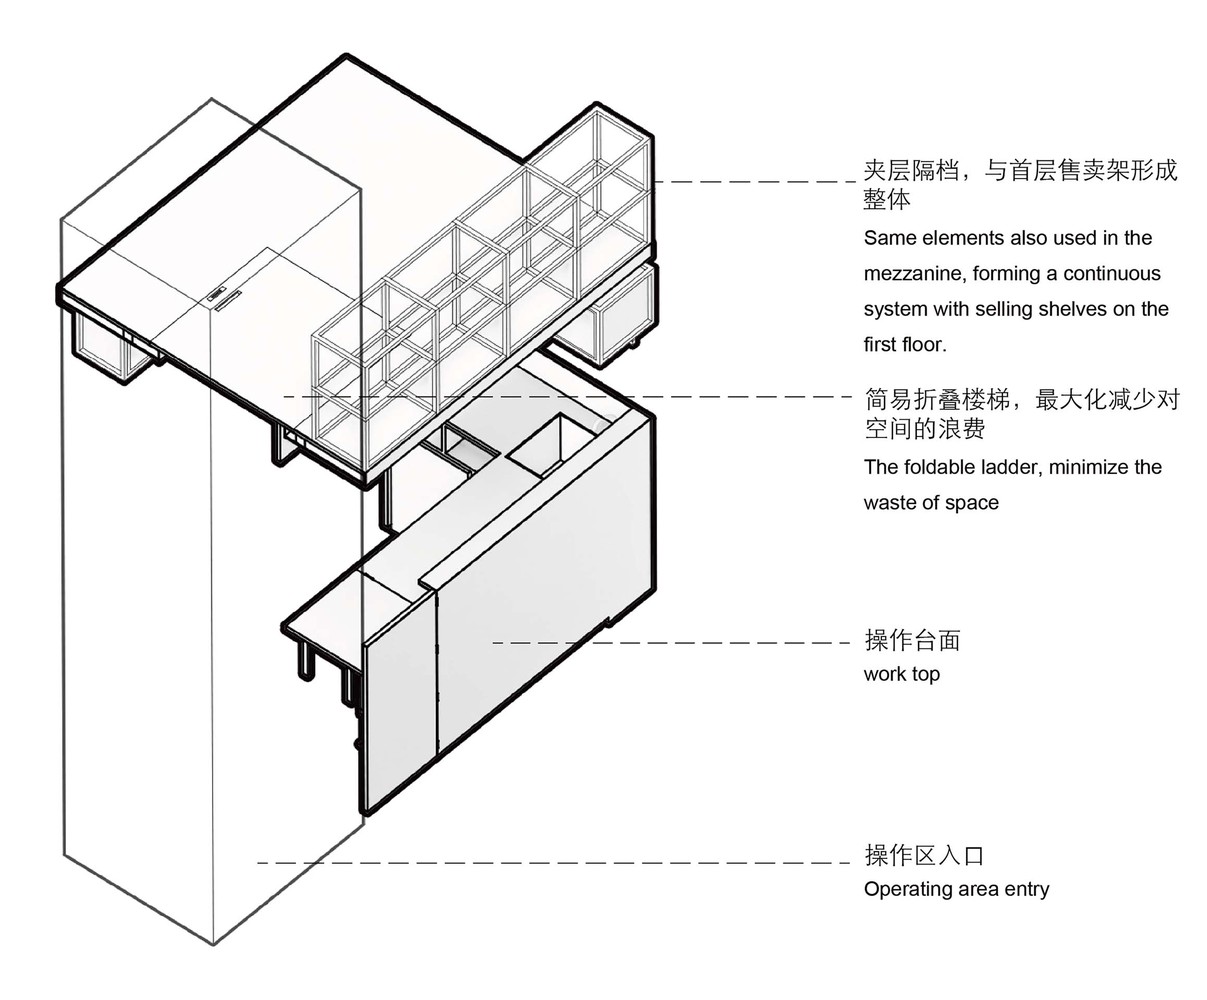 32_Mezzanine_and_coffee_area_©_Onexn_Architects.jpg